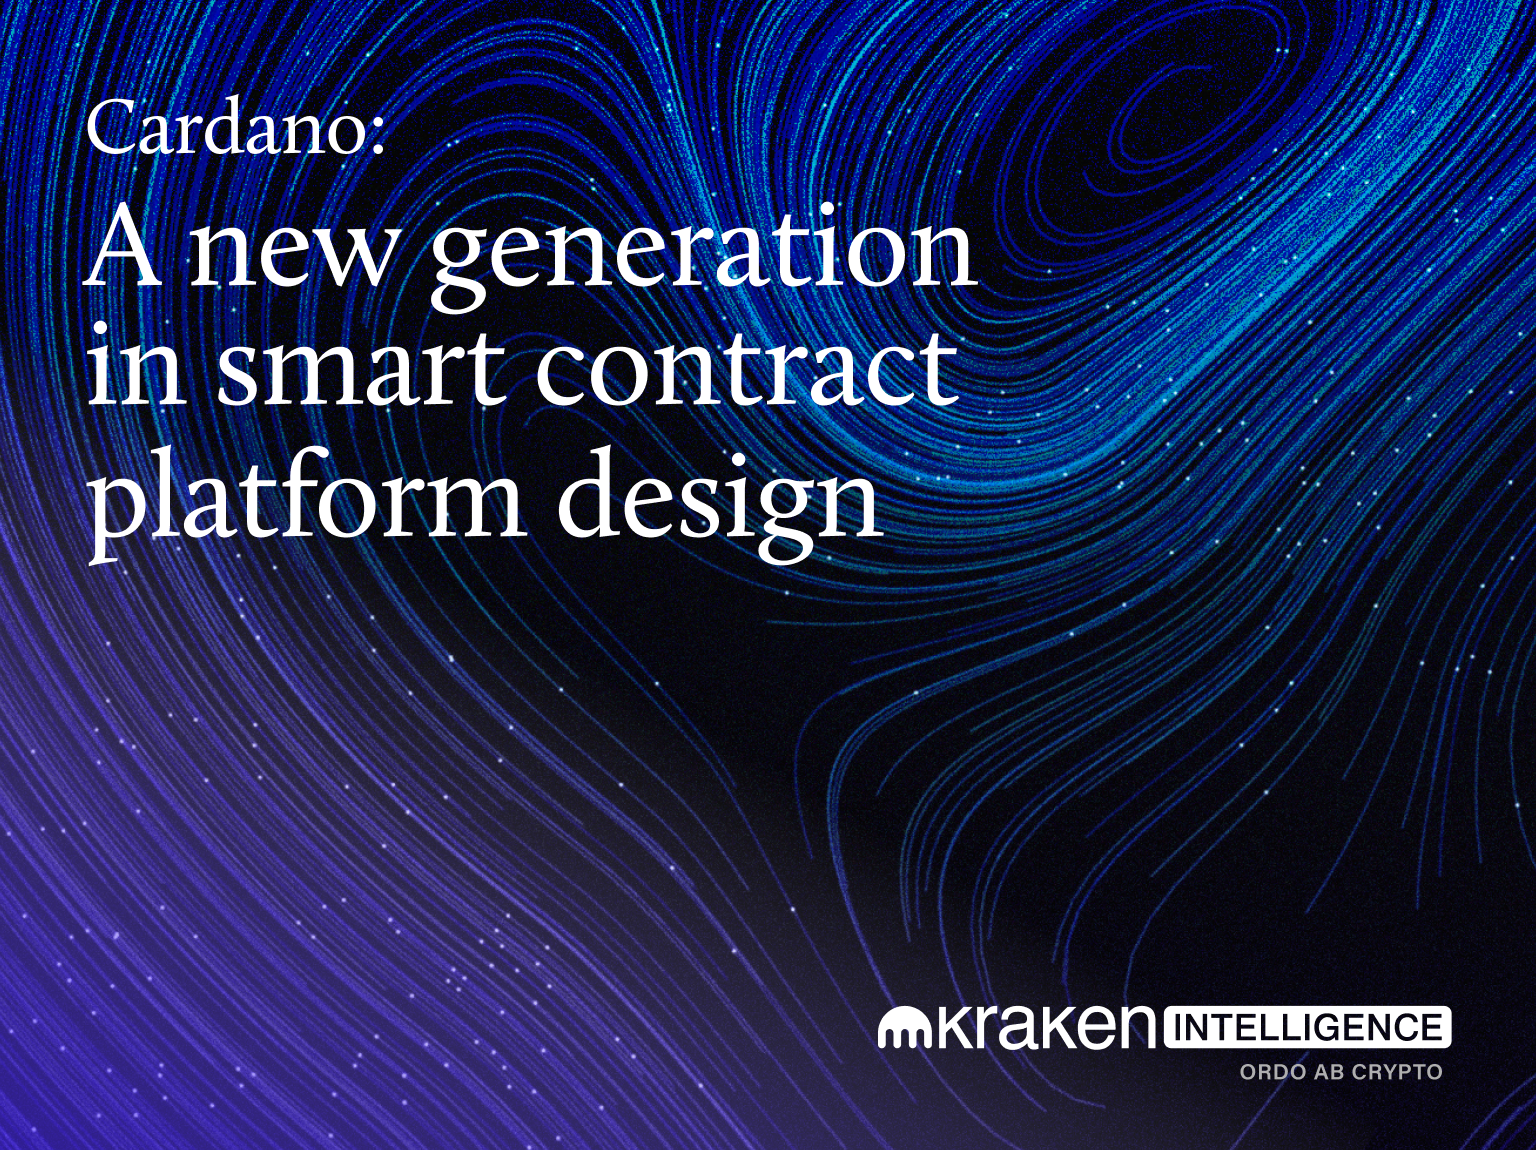 कार्डानो: स्मार्ट कॉन्ट्रैक्ट प्लेटफॉर्म डिजाइन प्लेटोब्लॉकचैन डेटा इंटेलिजेंस में एक नई पीढ़ी। लंबवत खोज। ऐ.